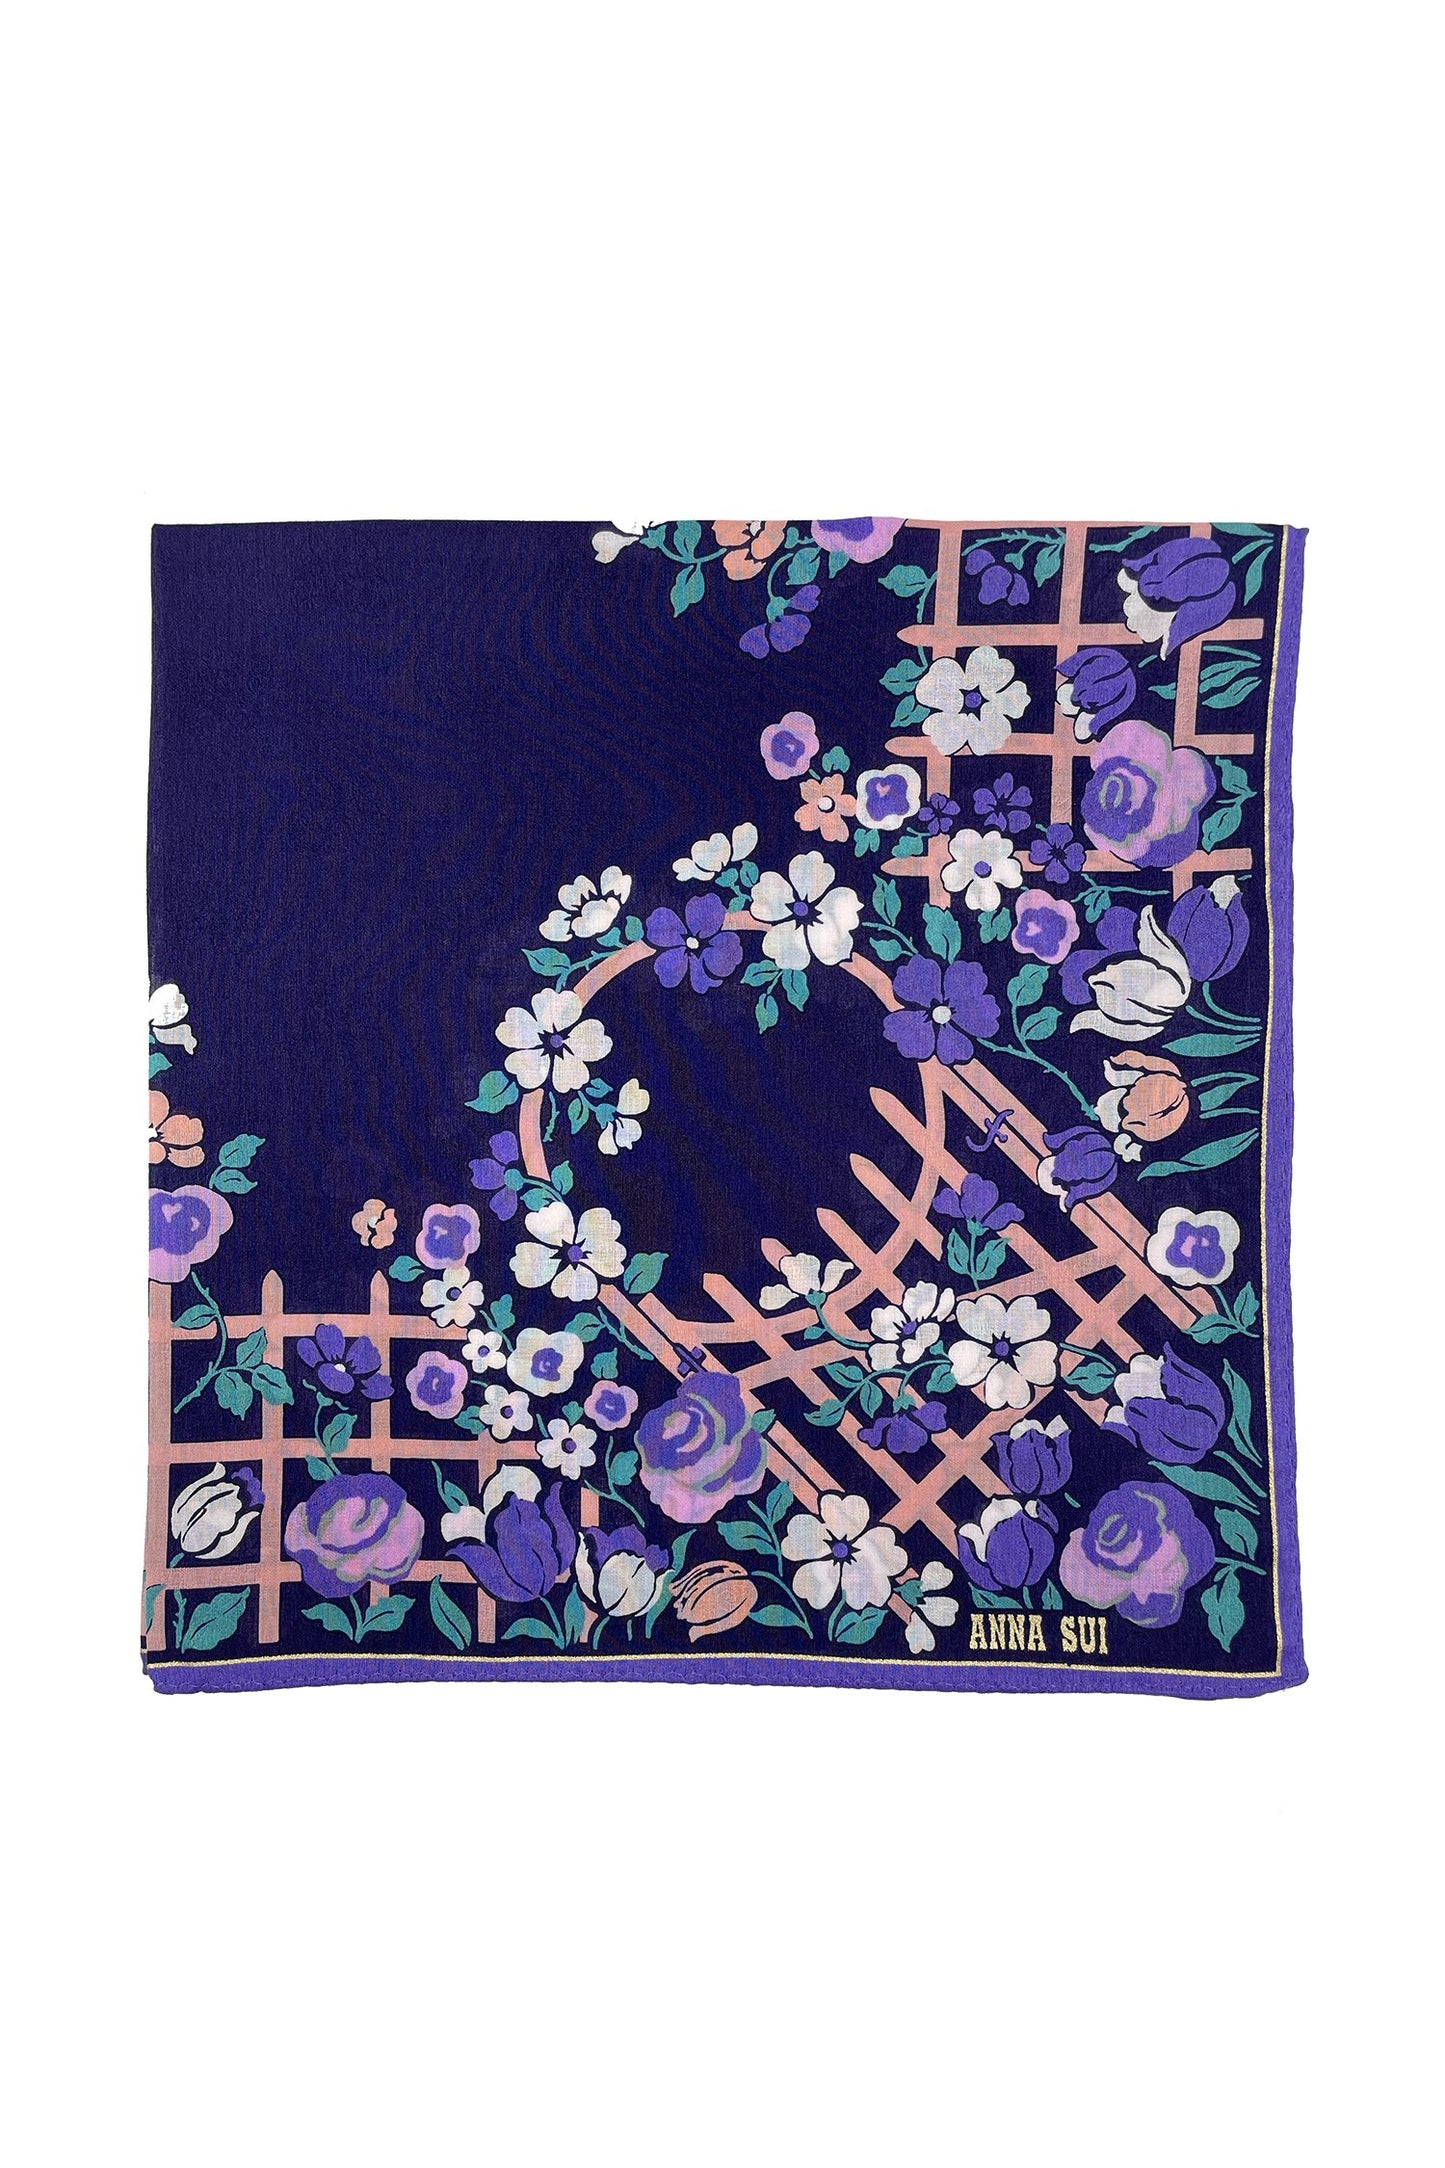 Handkerchief, blue, purple roses/white pansies on a beige trellis, Anna’s label, and purple border